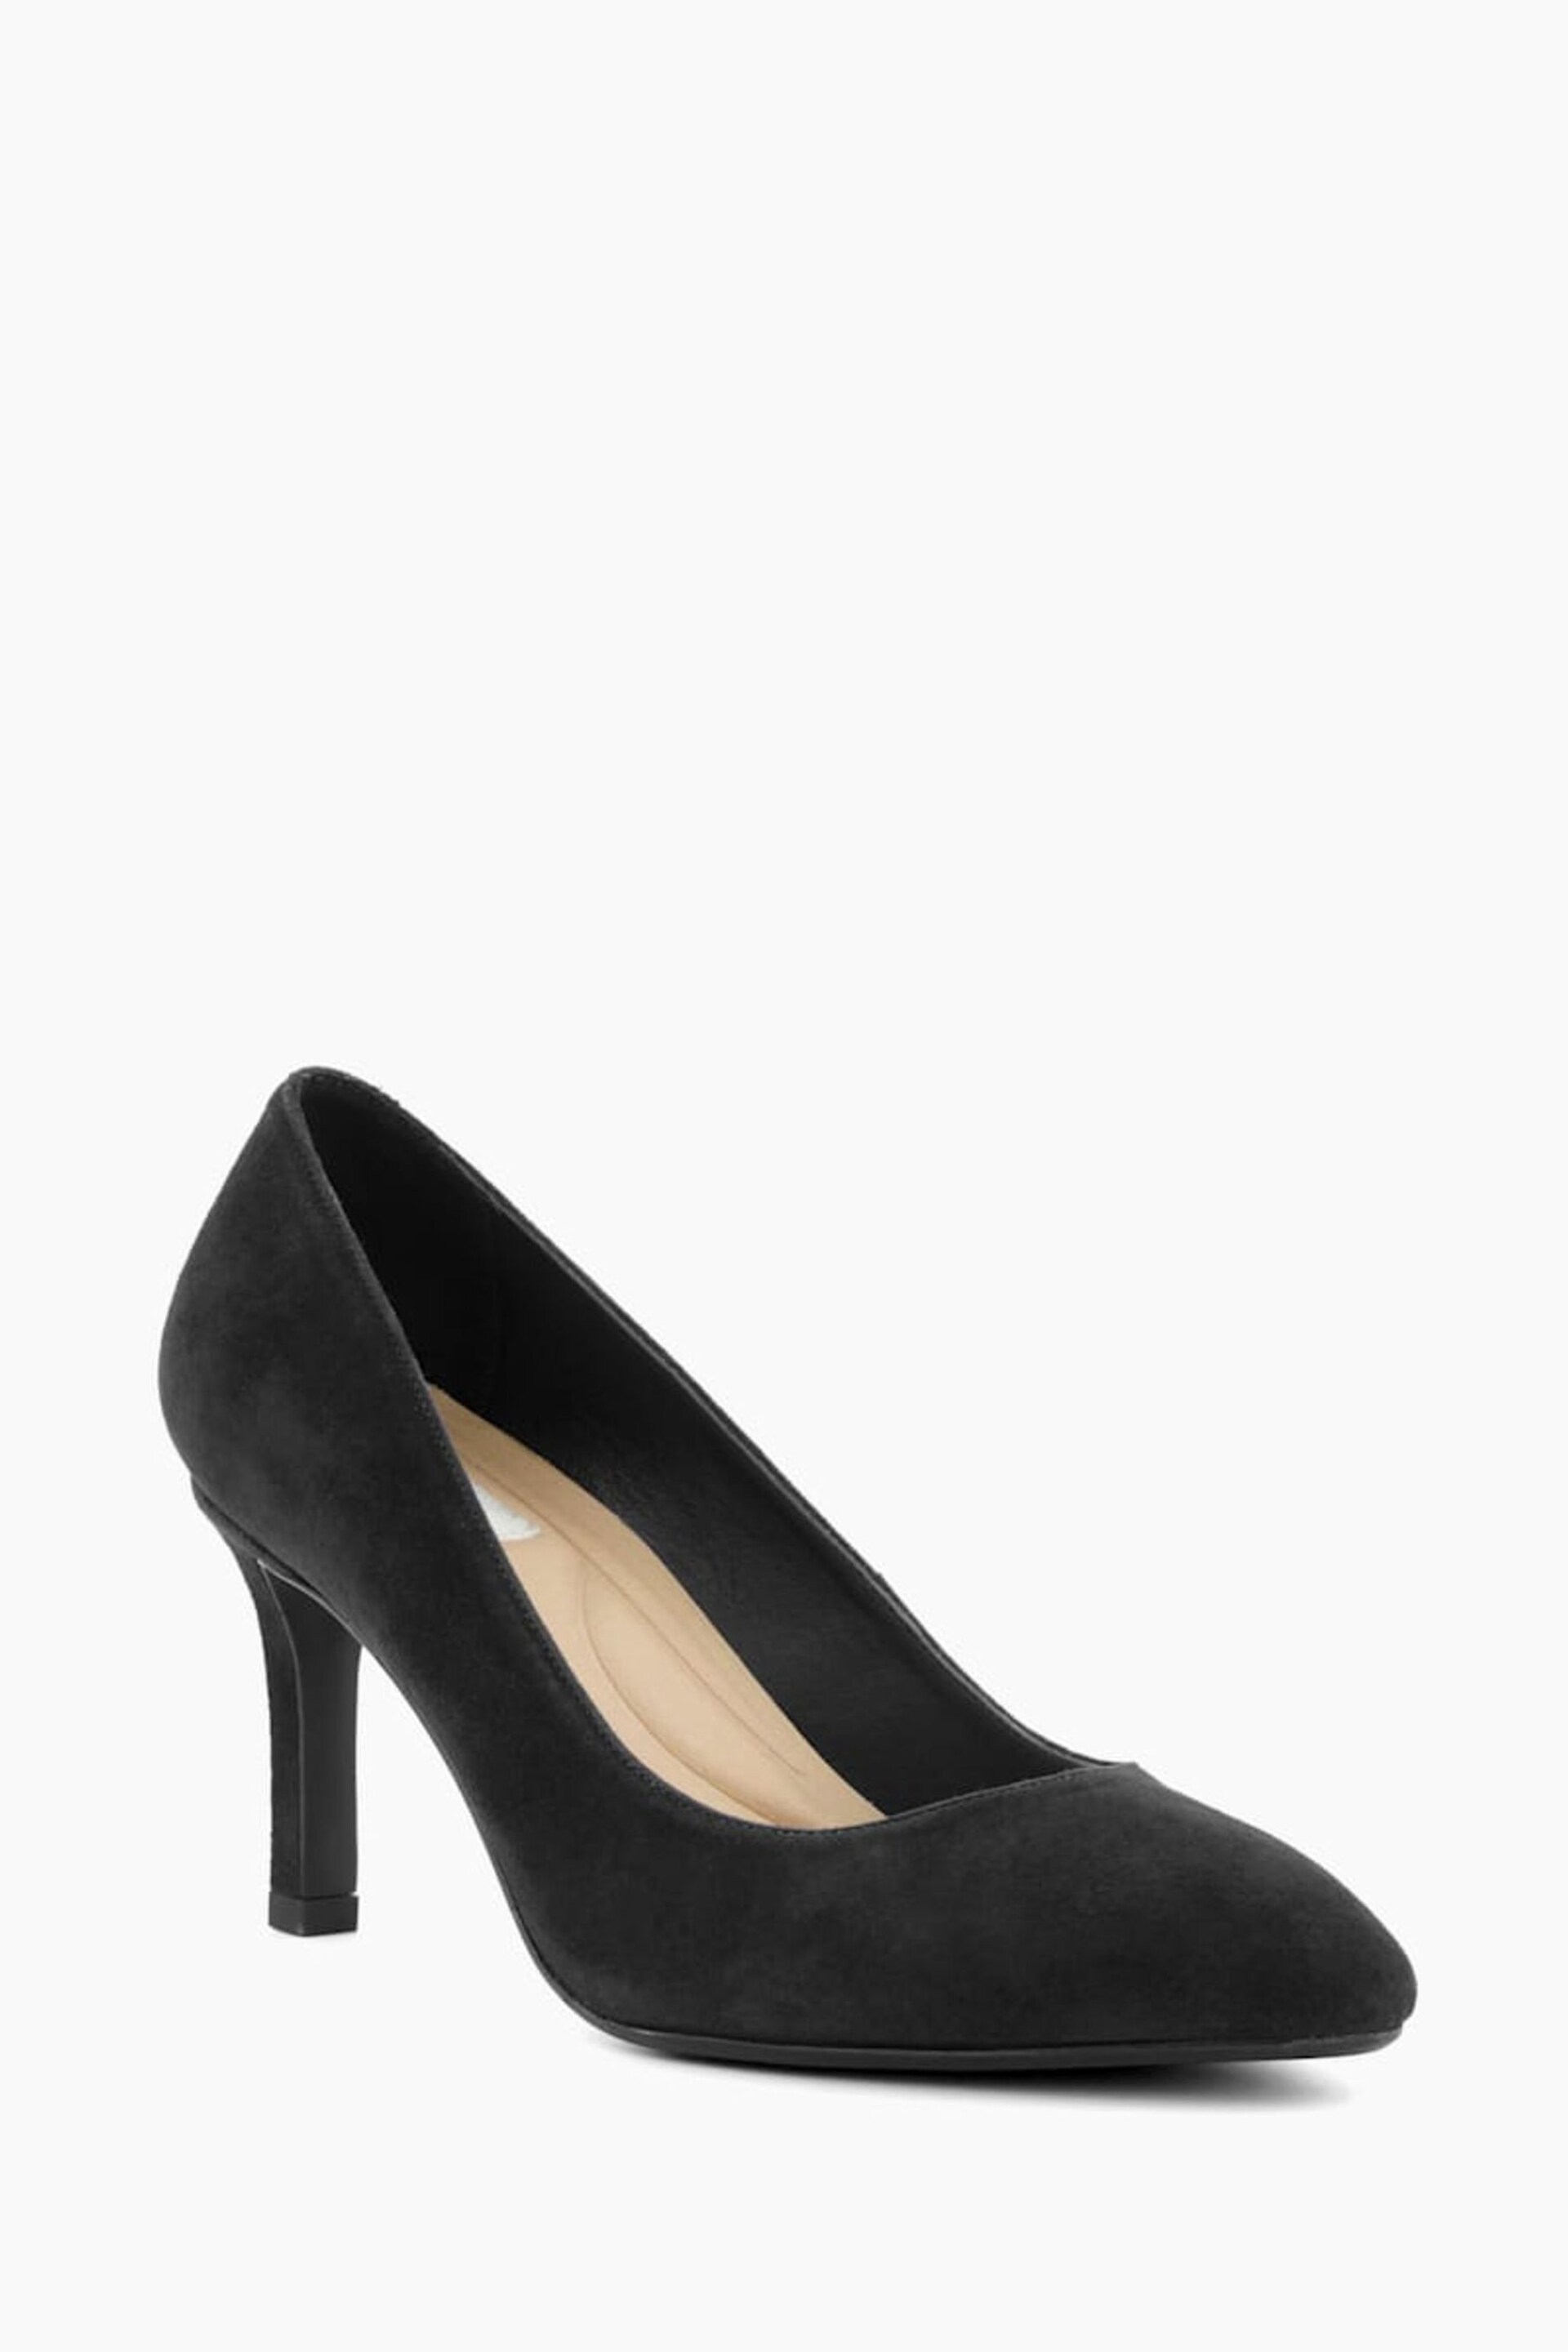 Dune London Black Adele New Comfort Shoes - Image 4 of 6